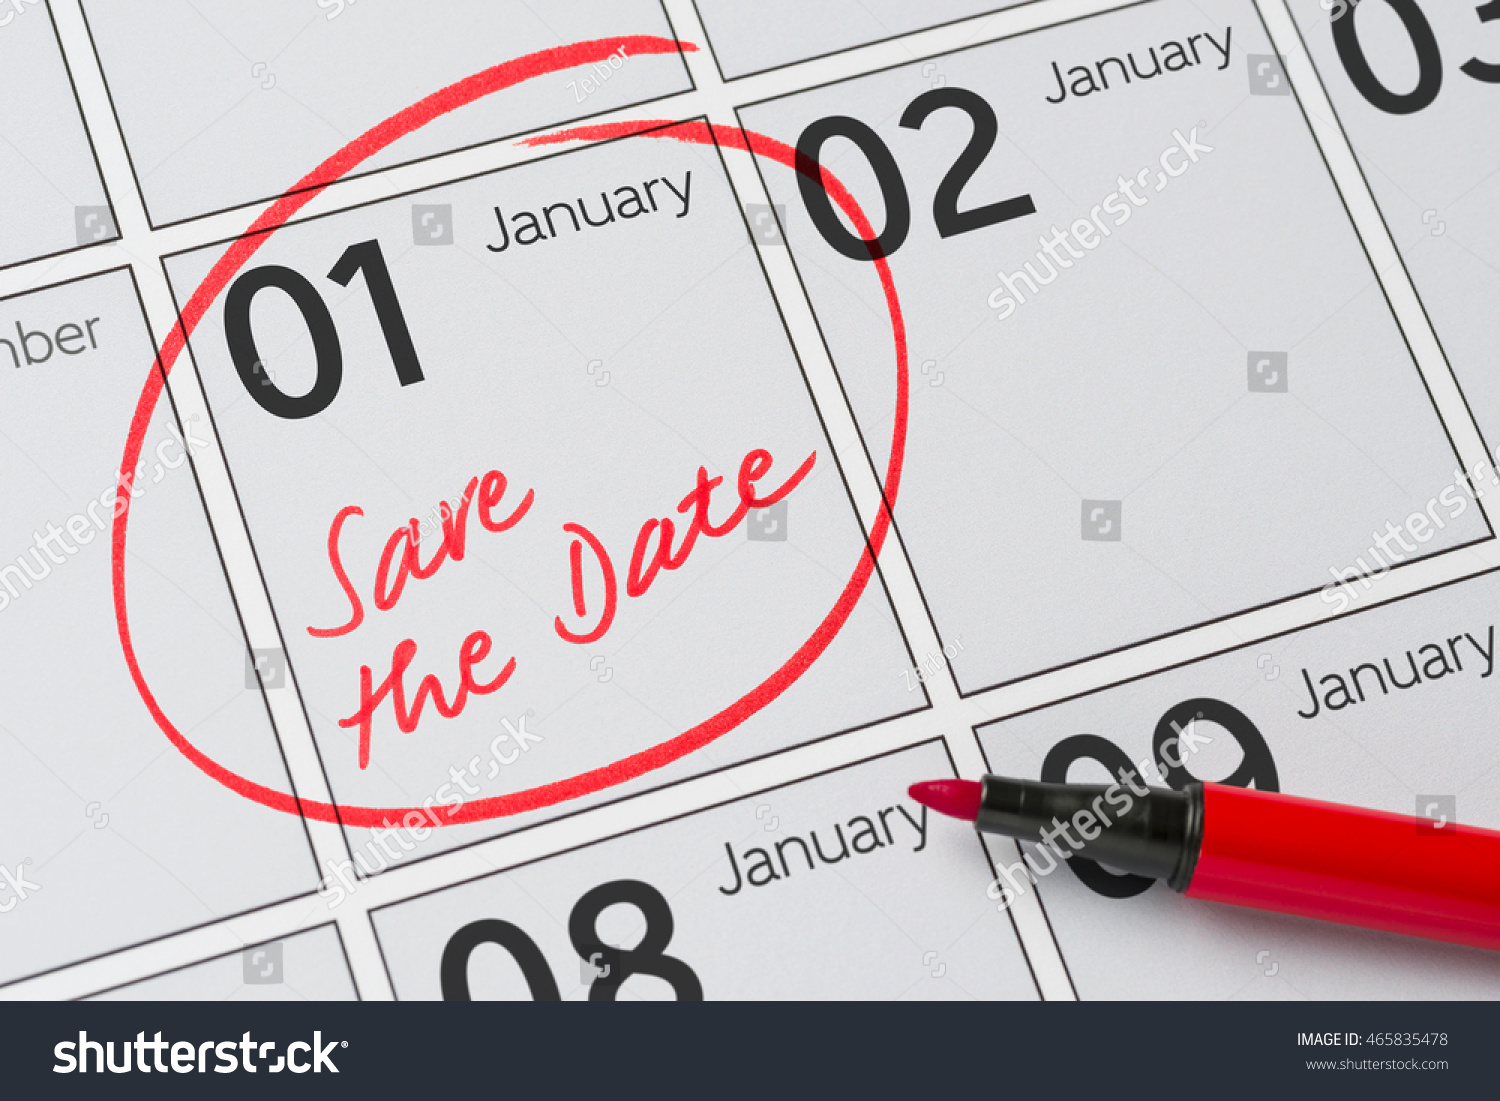 Save the Date written on a calendar - January 1 #465835478